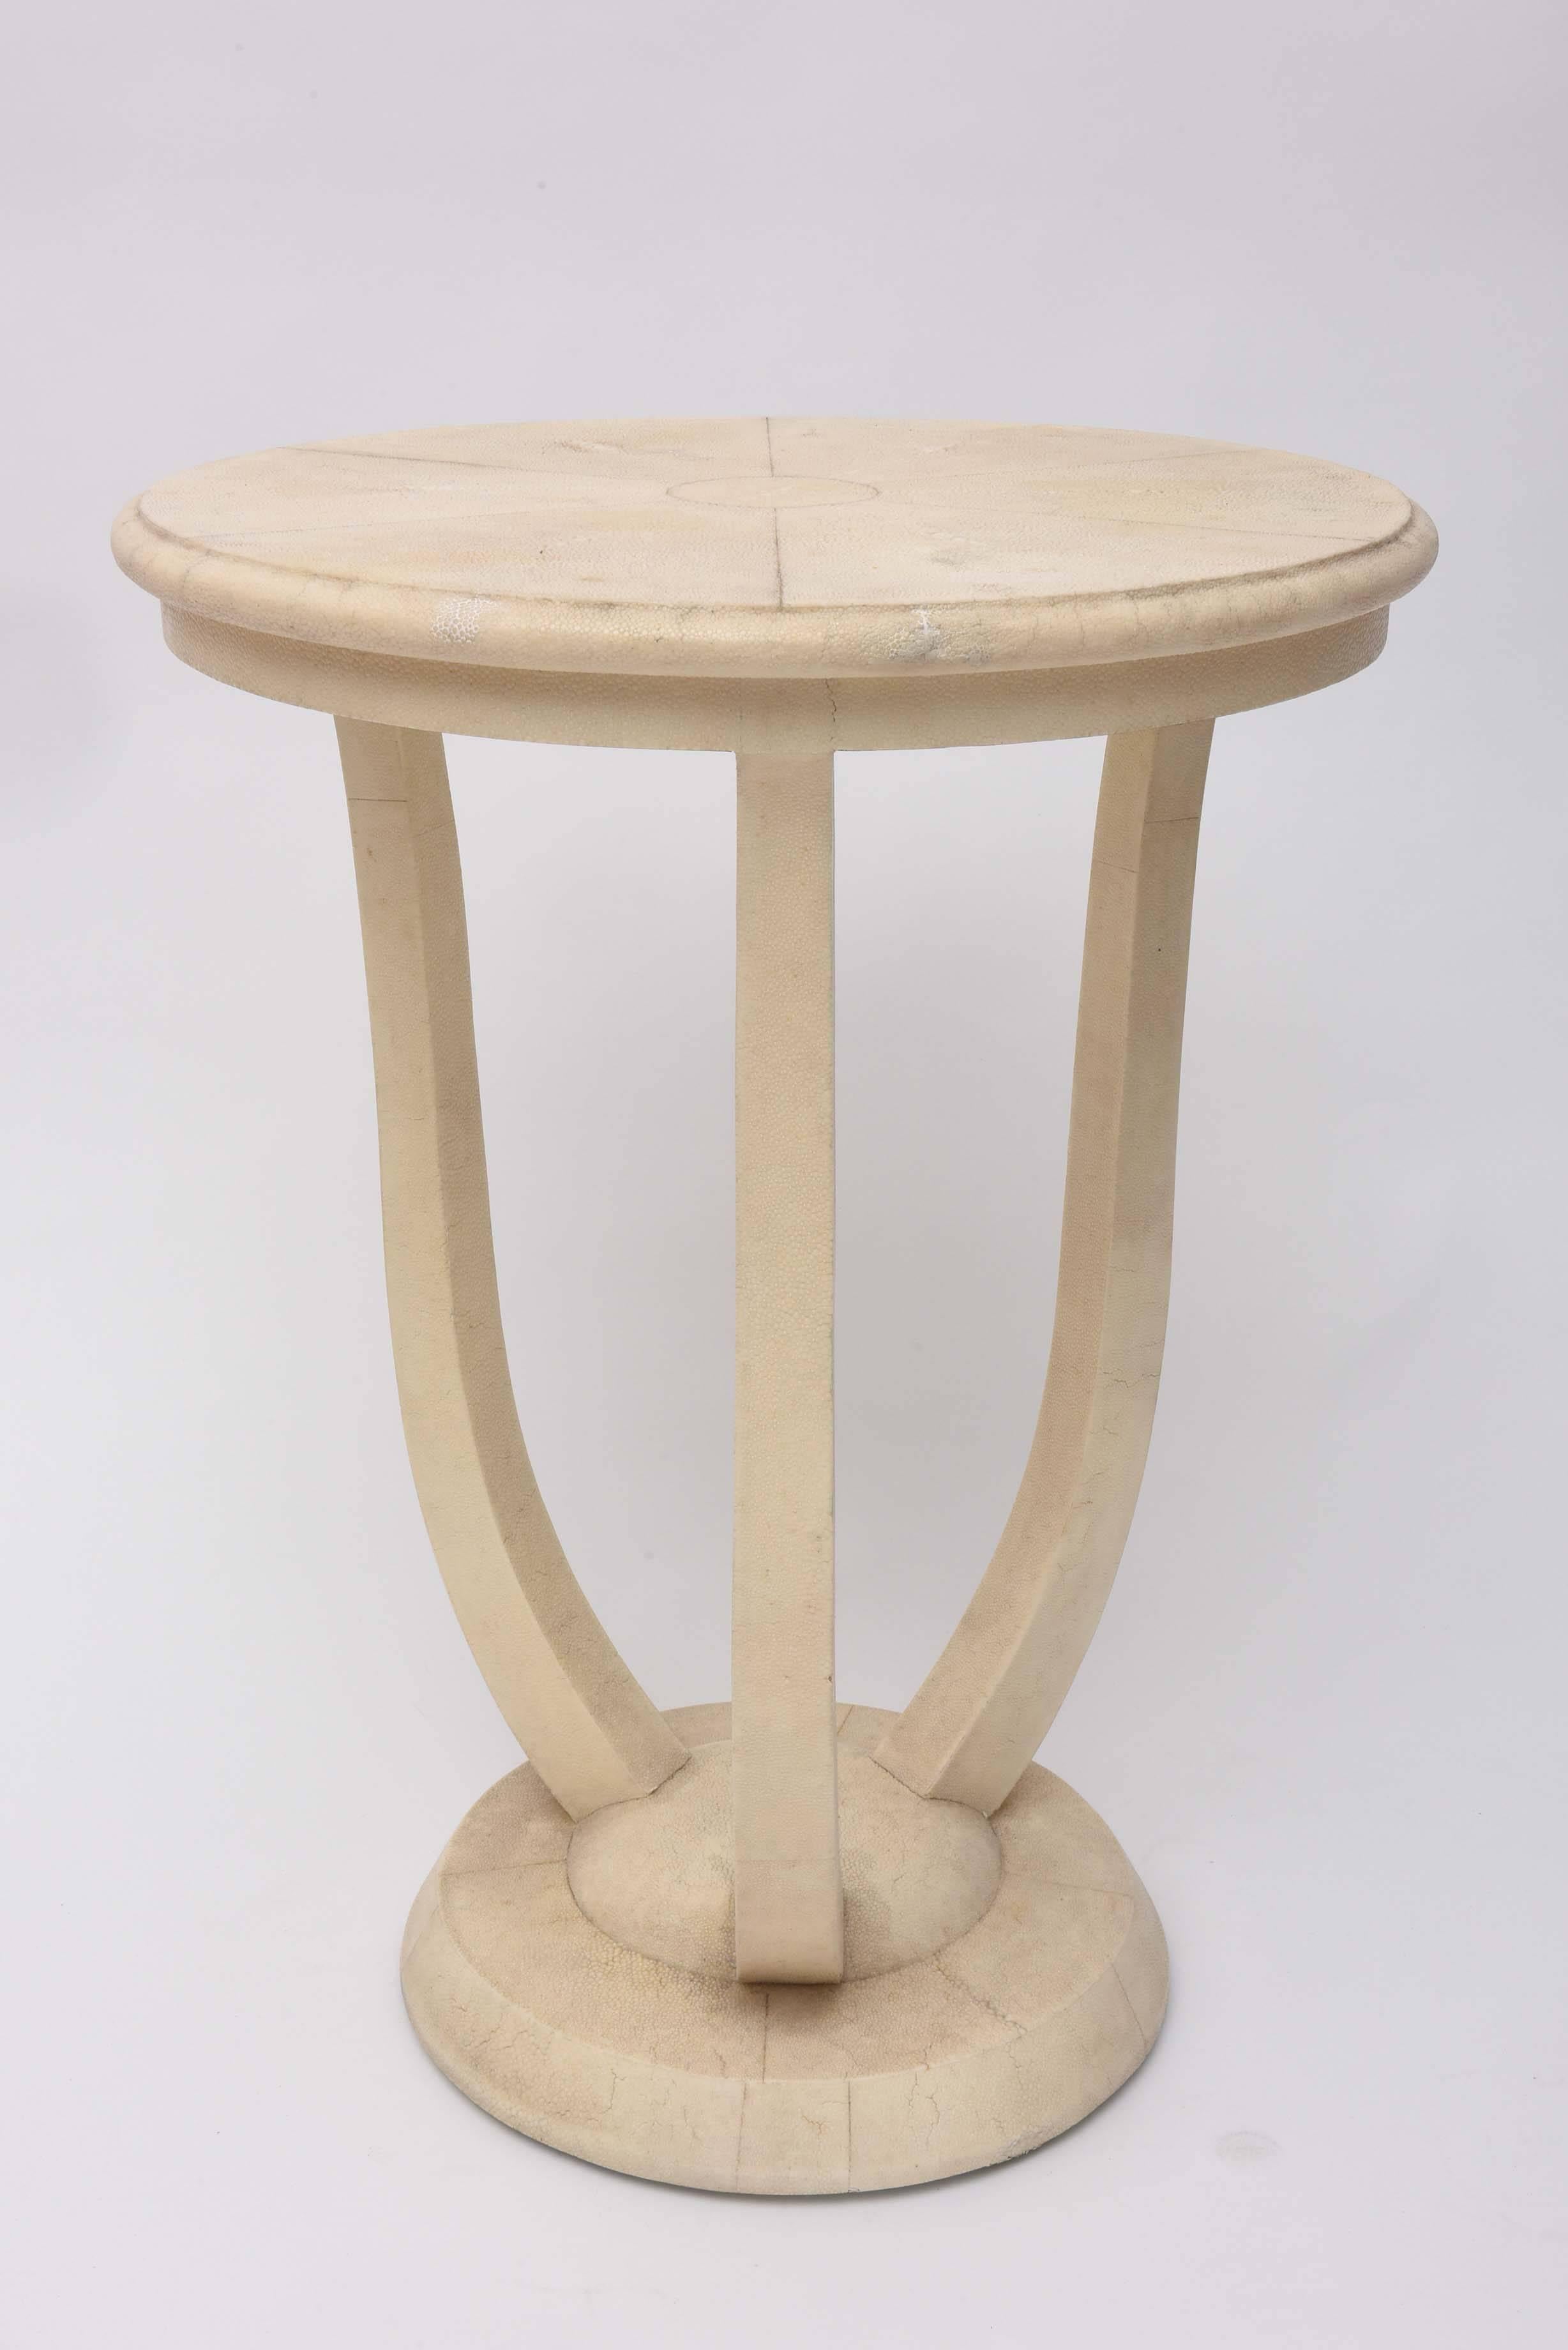 A reinterpretation of a Classic form.
The table exhibits a subtle color and texture.
Label below.